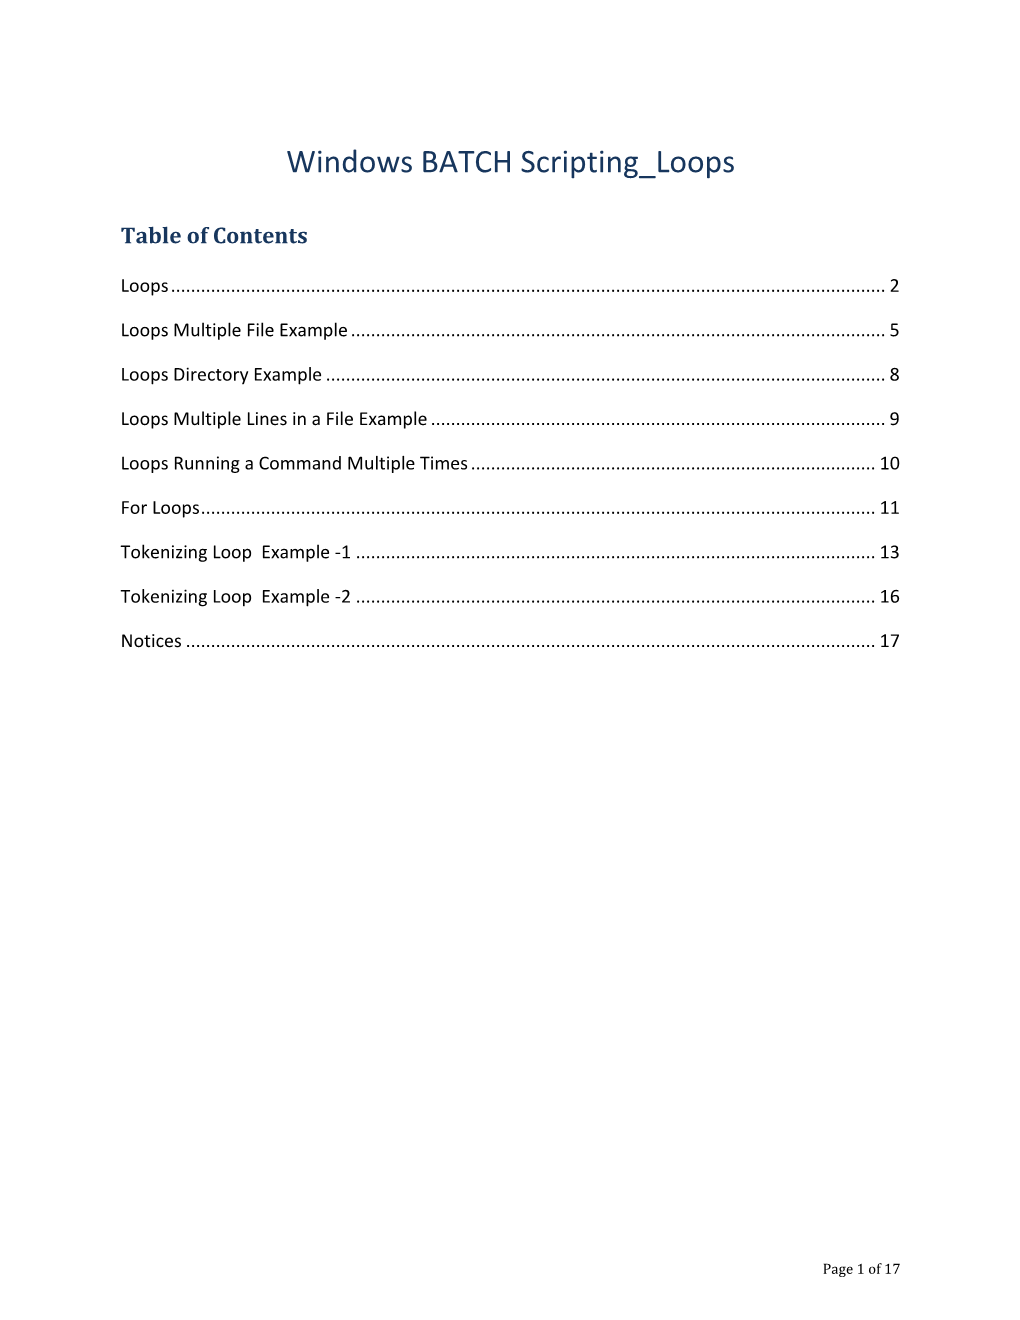 Windows BATCH Scripting Loops